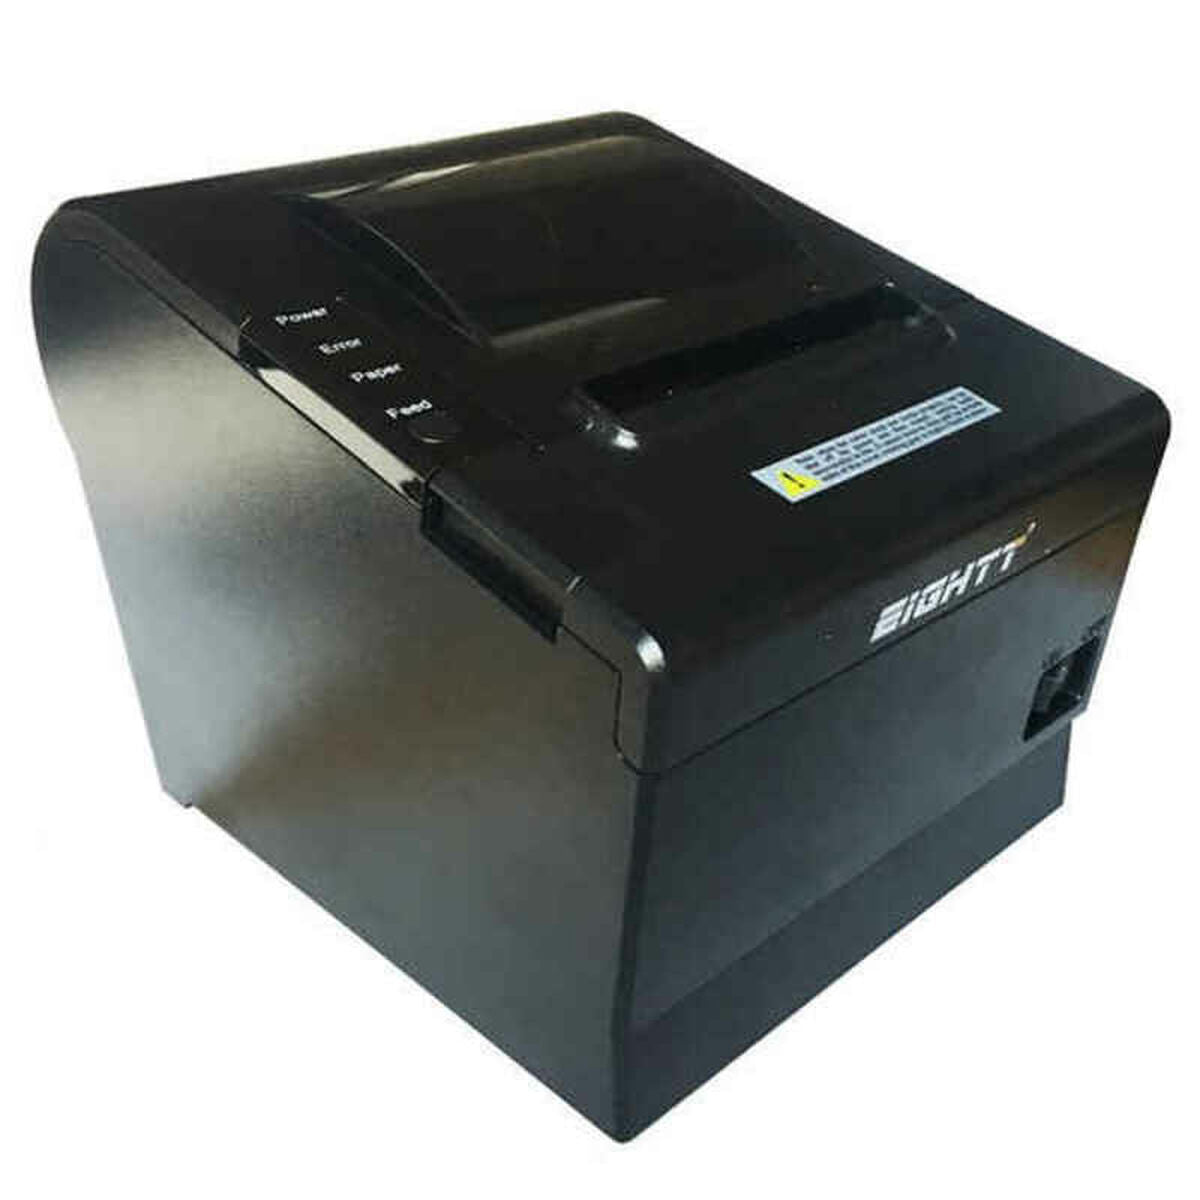 Thermal Printer Eightt EPOS-80